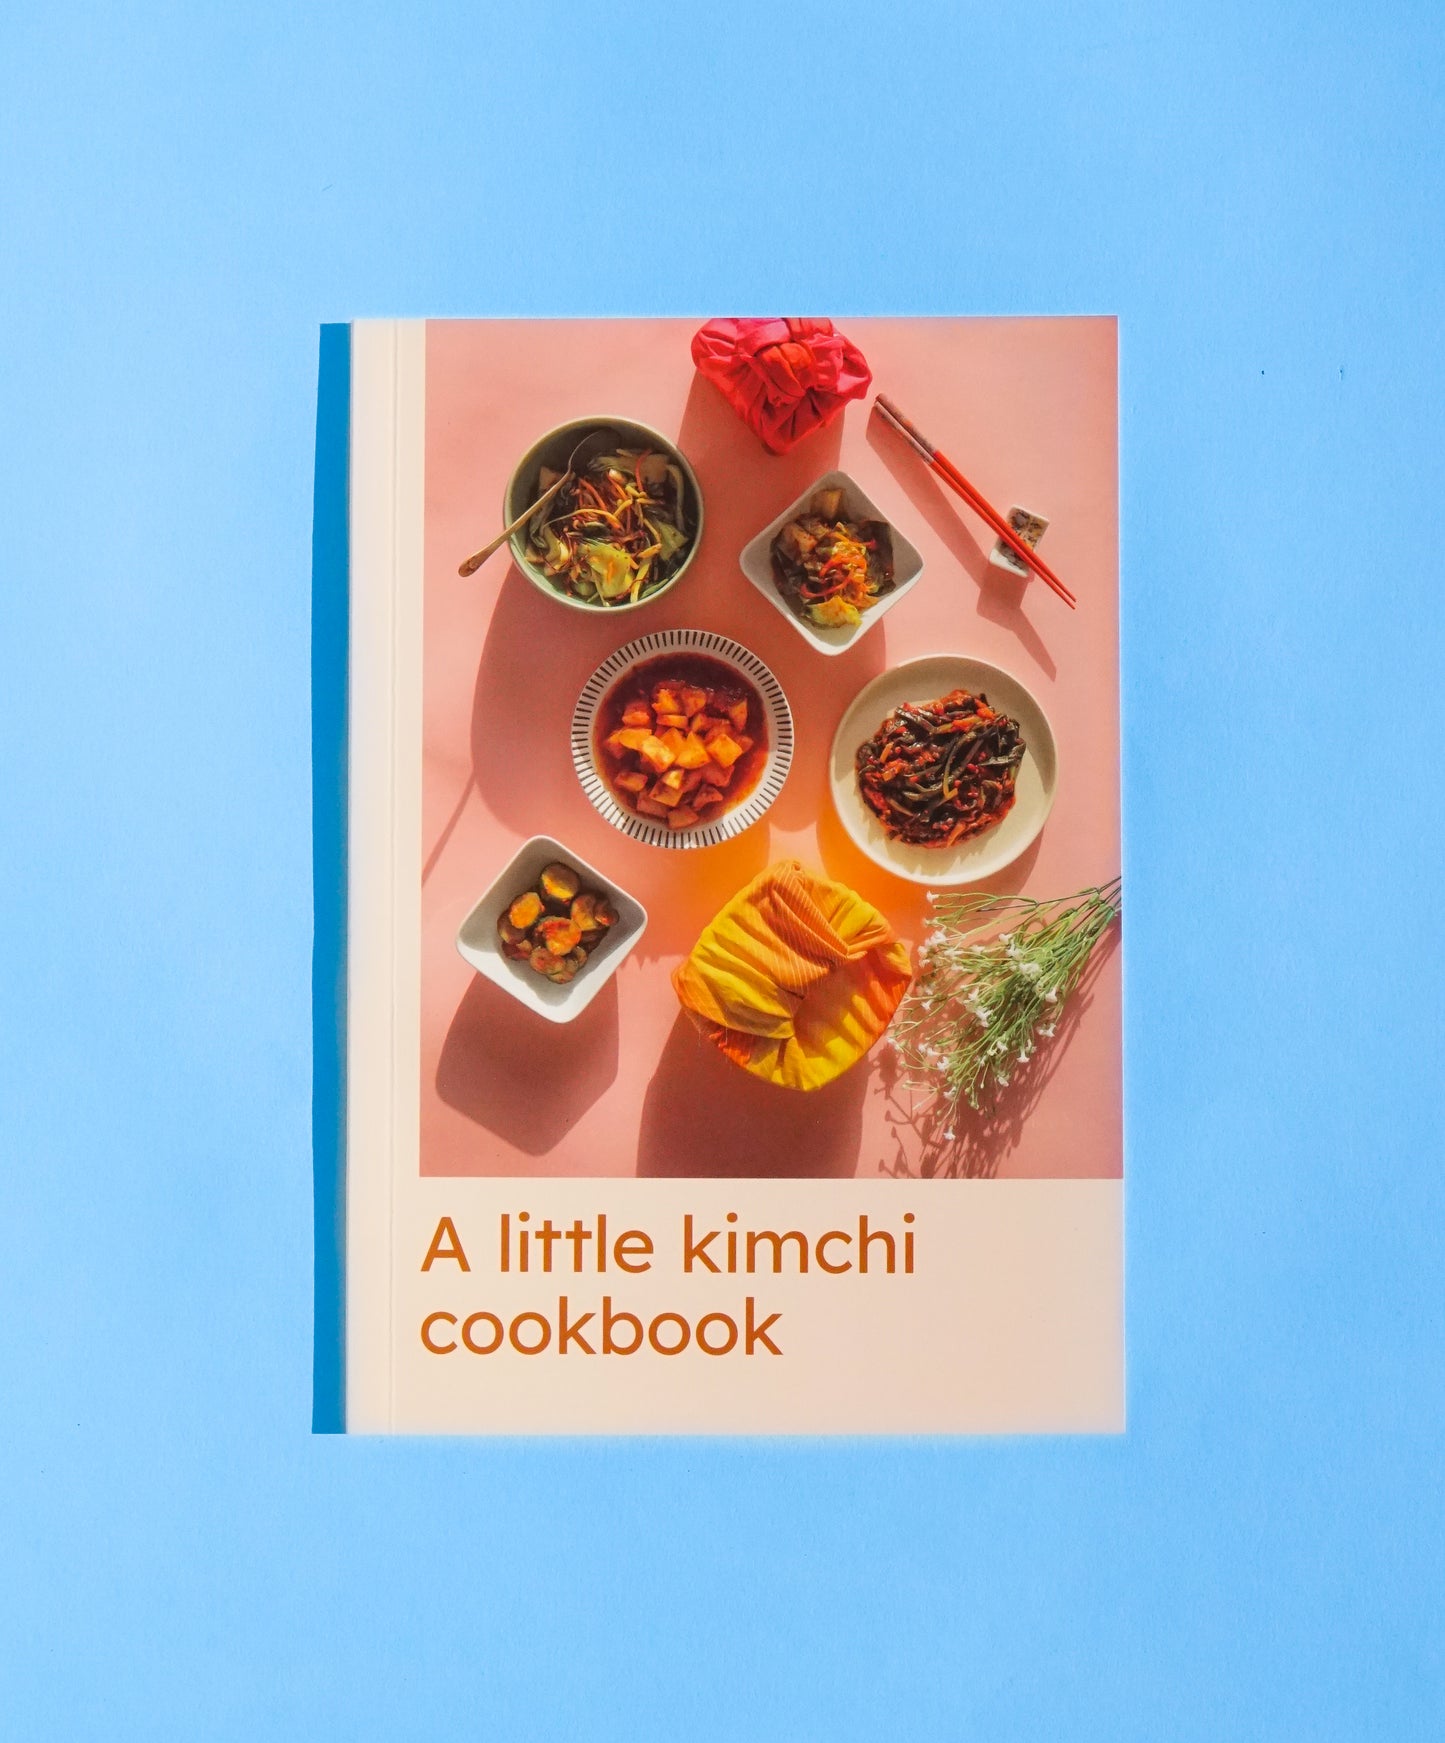 A little kimchi cookbook